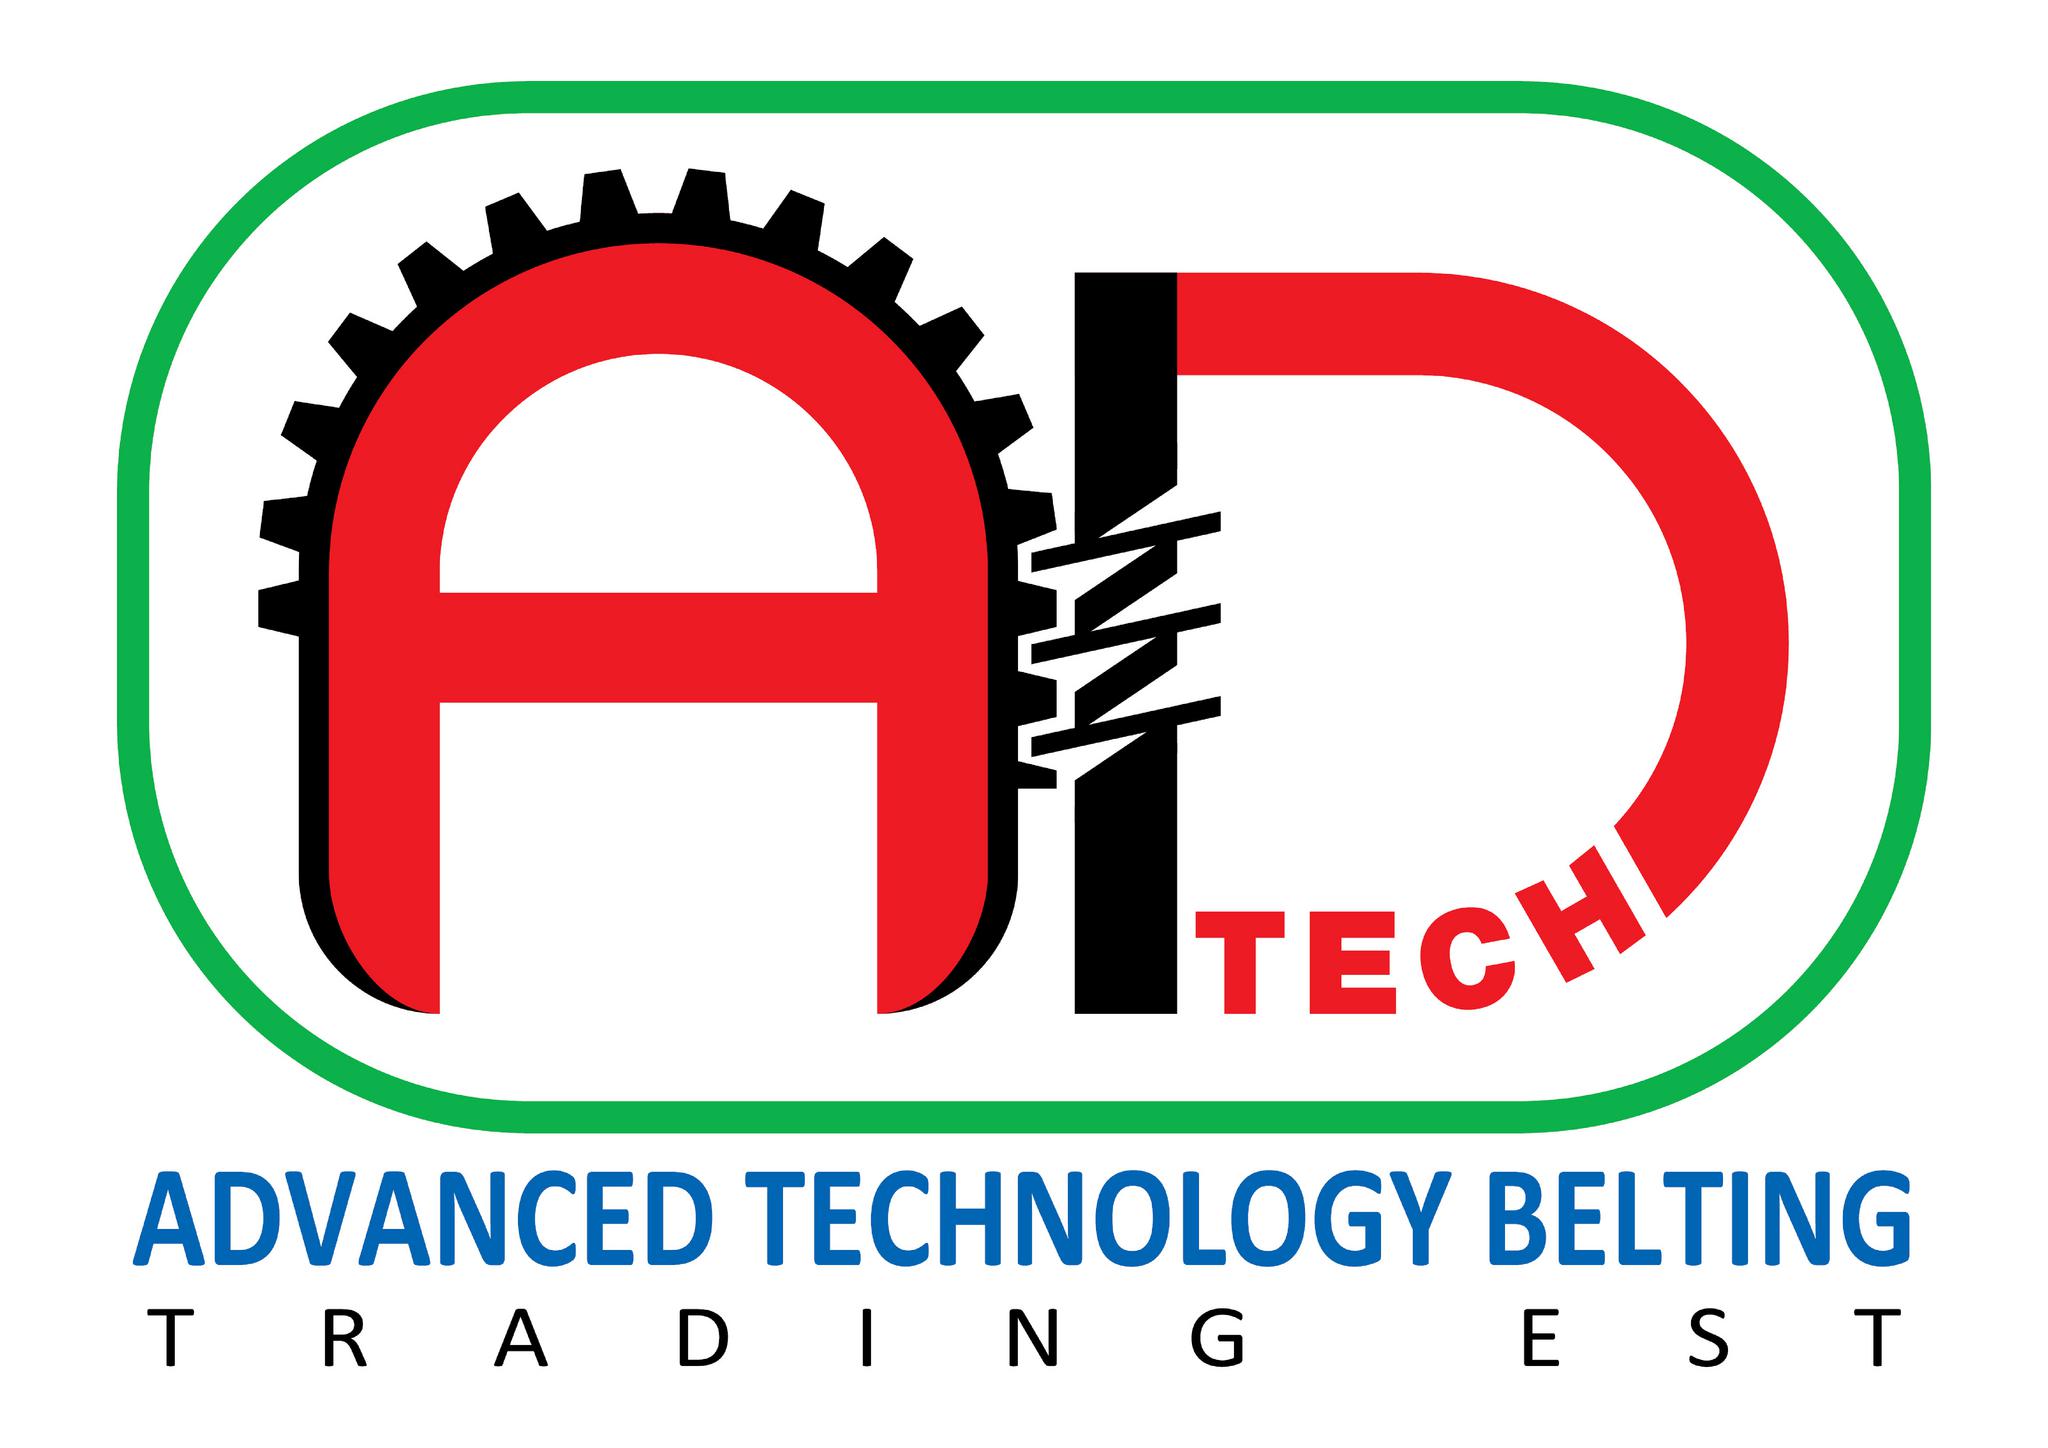 Advanced Technology Belting Trading Est. (adtech)